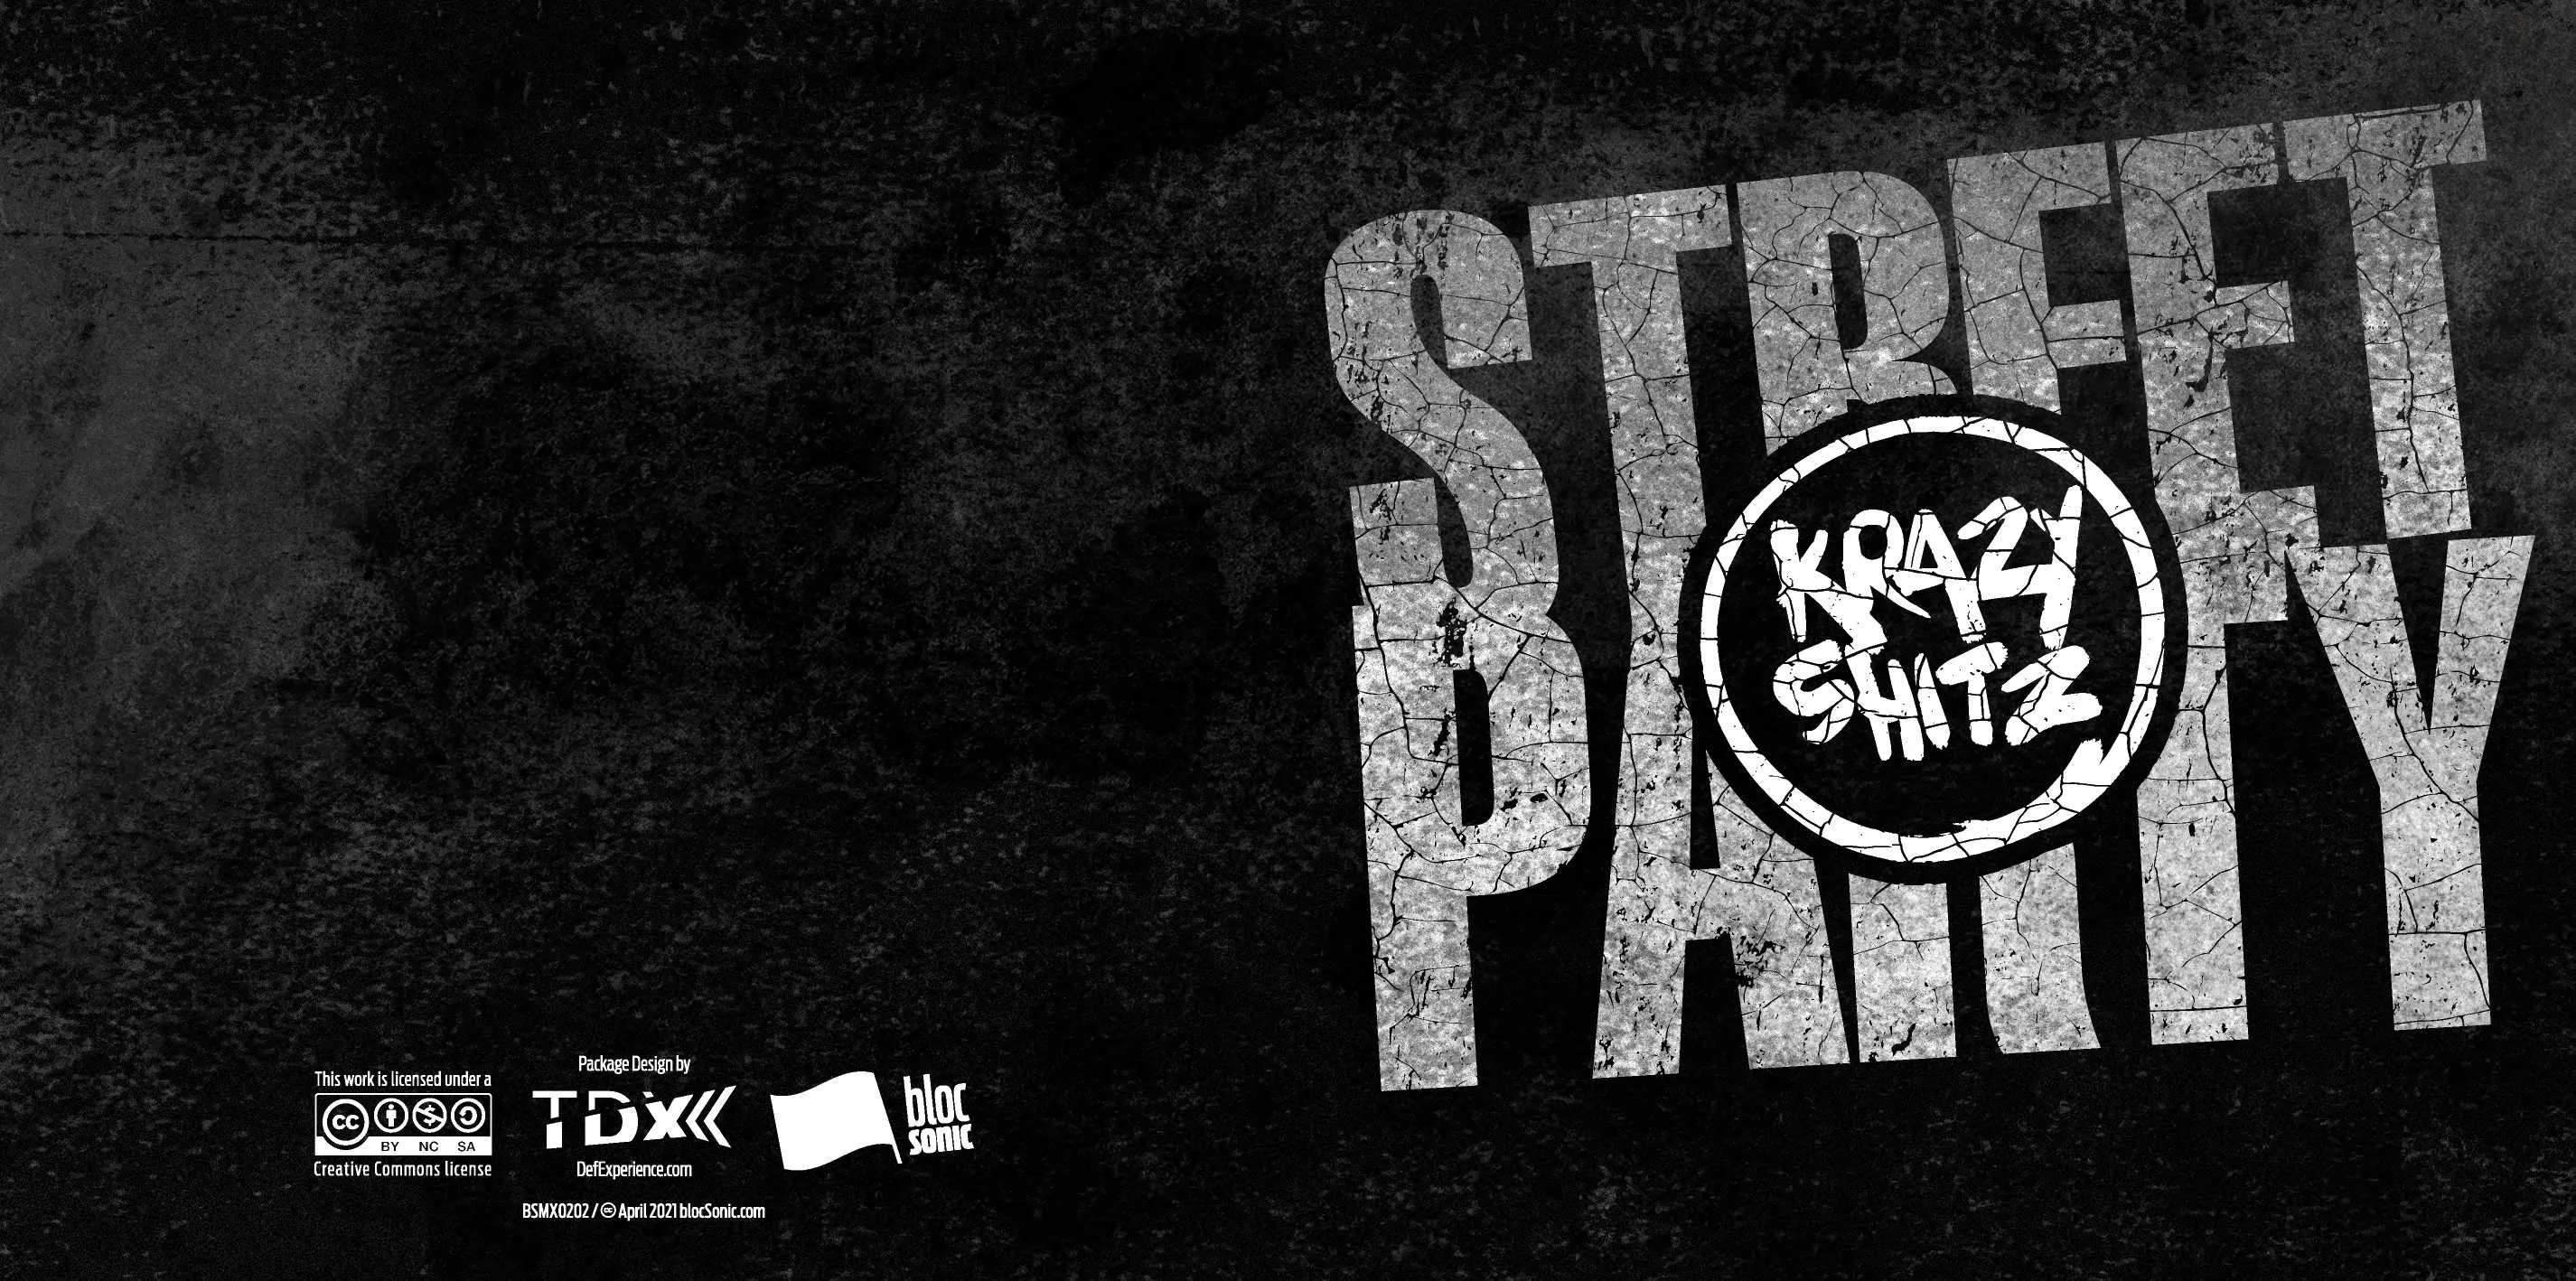 Album insert for “Street Party” by Krazy Shitz